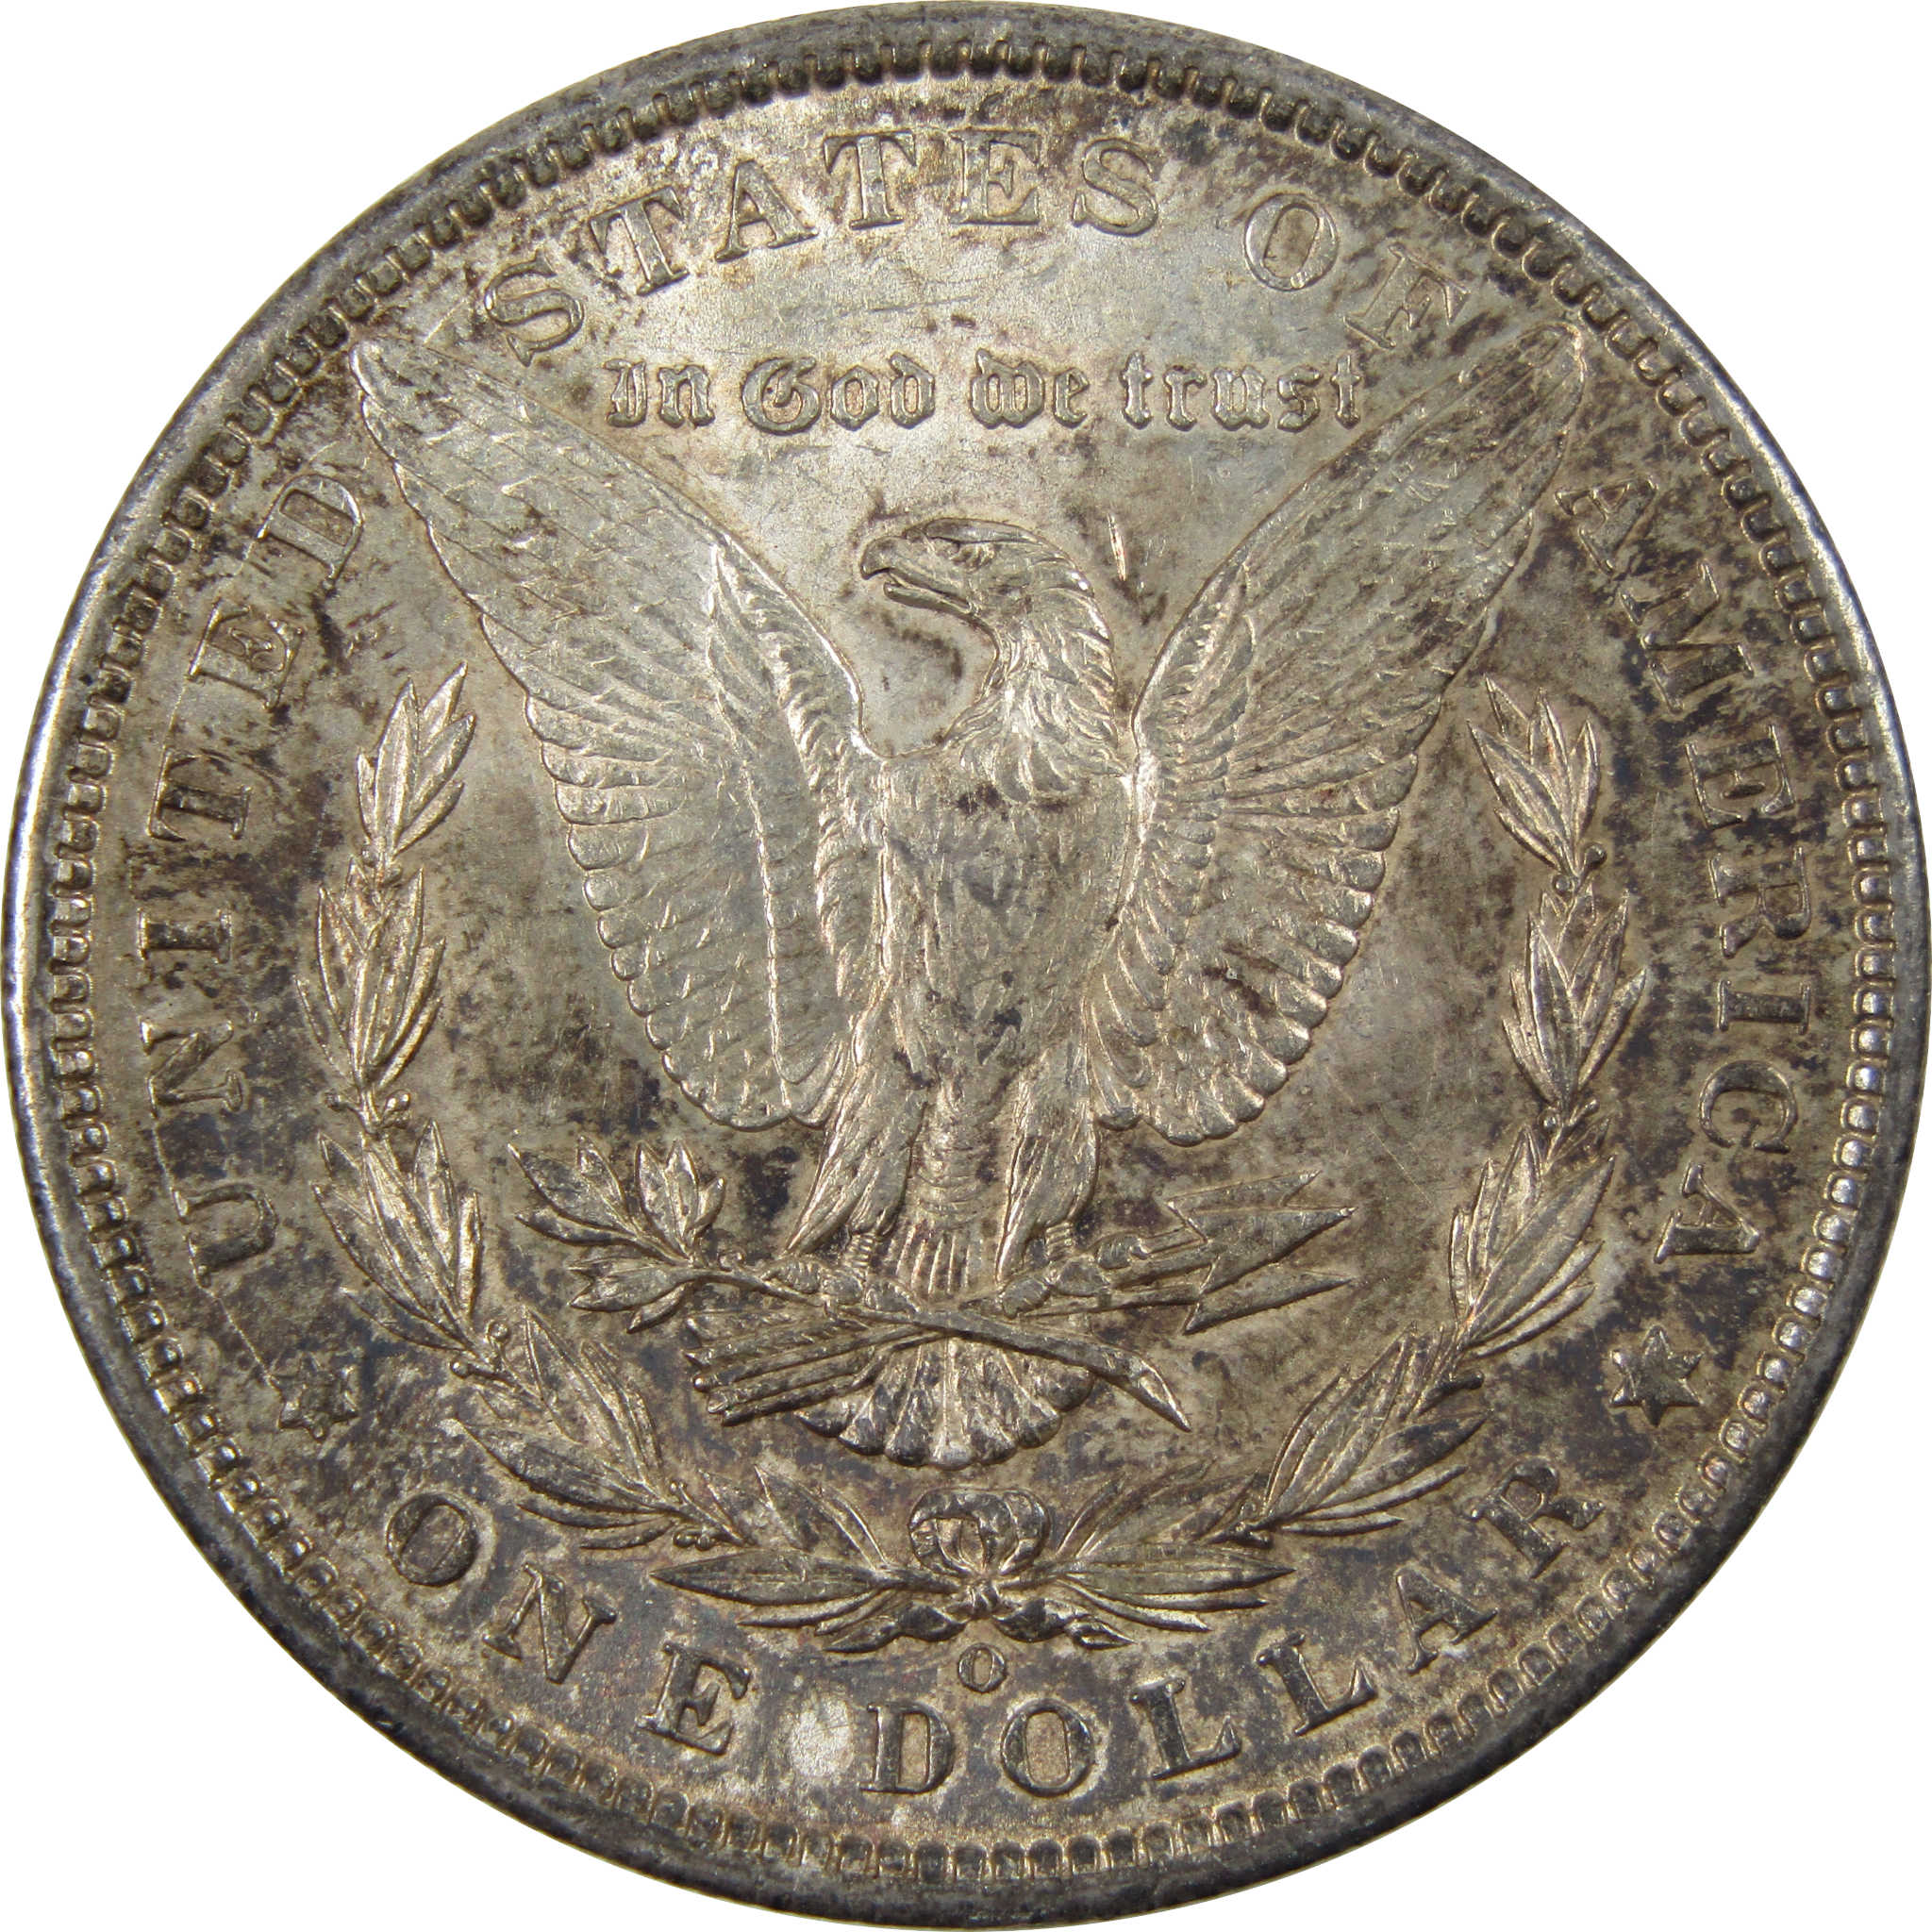 1897 O Morgan Dollar Borderline Uncirculated 90% Silver $1 SKU:I4361 - Morgan coin - Morgan silver dollar - Morgan silver dollar for sale - Profile Coins &amp; Collectibles